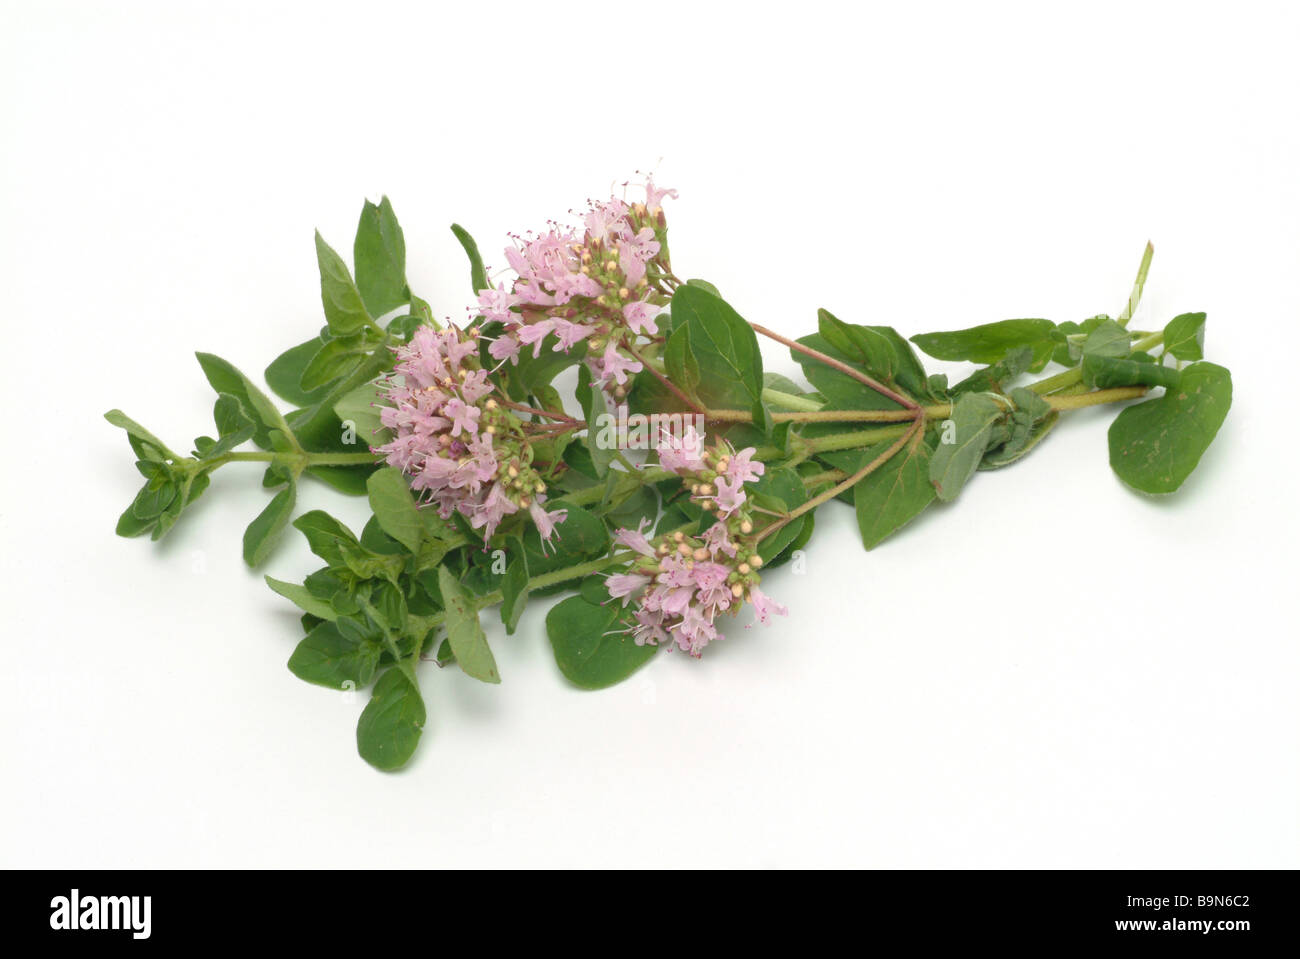 Heilpflanze Dost Oregano gemeinsame Majoran Origanum vulgare  Stockfotografie - Alamy